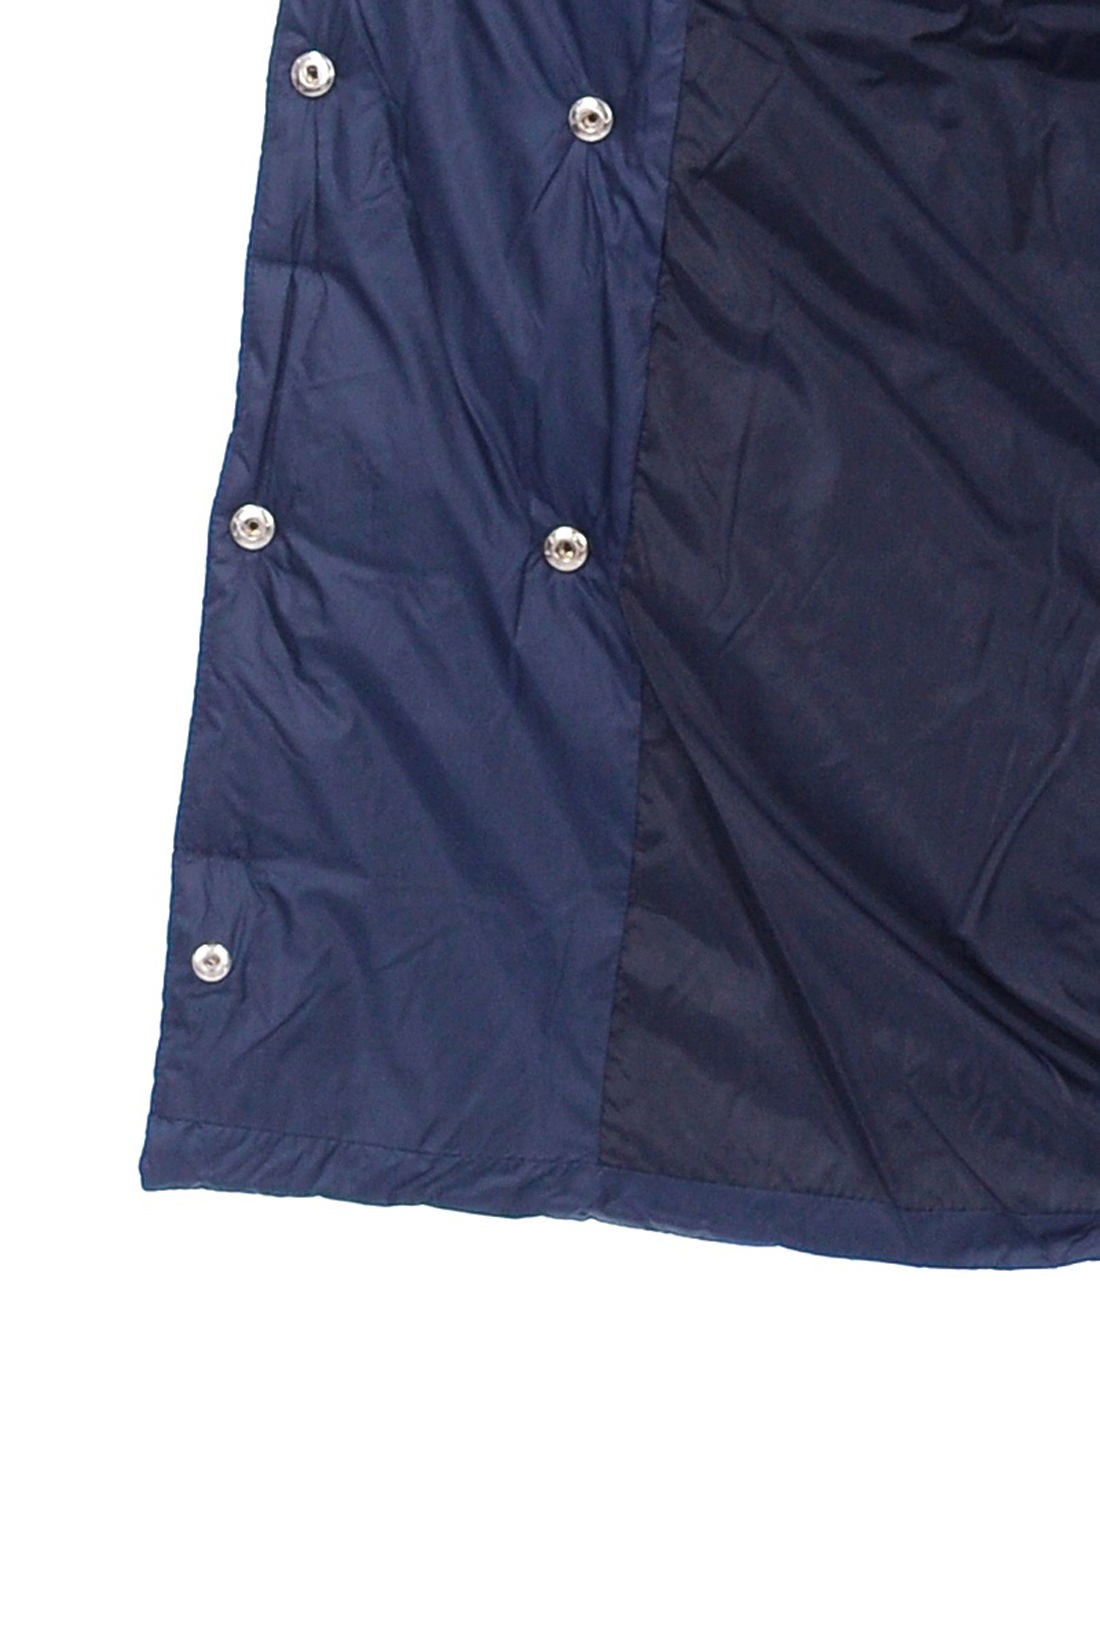 Удлинённая куртка на кнопках (арт. baon B038539), размер XXL, цвет синий Удлинённая куртка на кнопках (арт. baon B038539) - фото 4